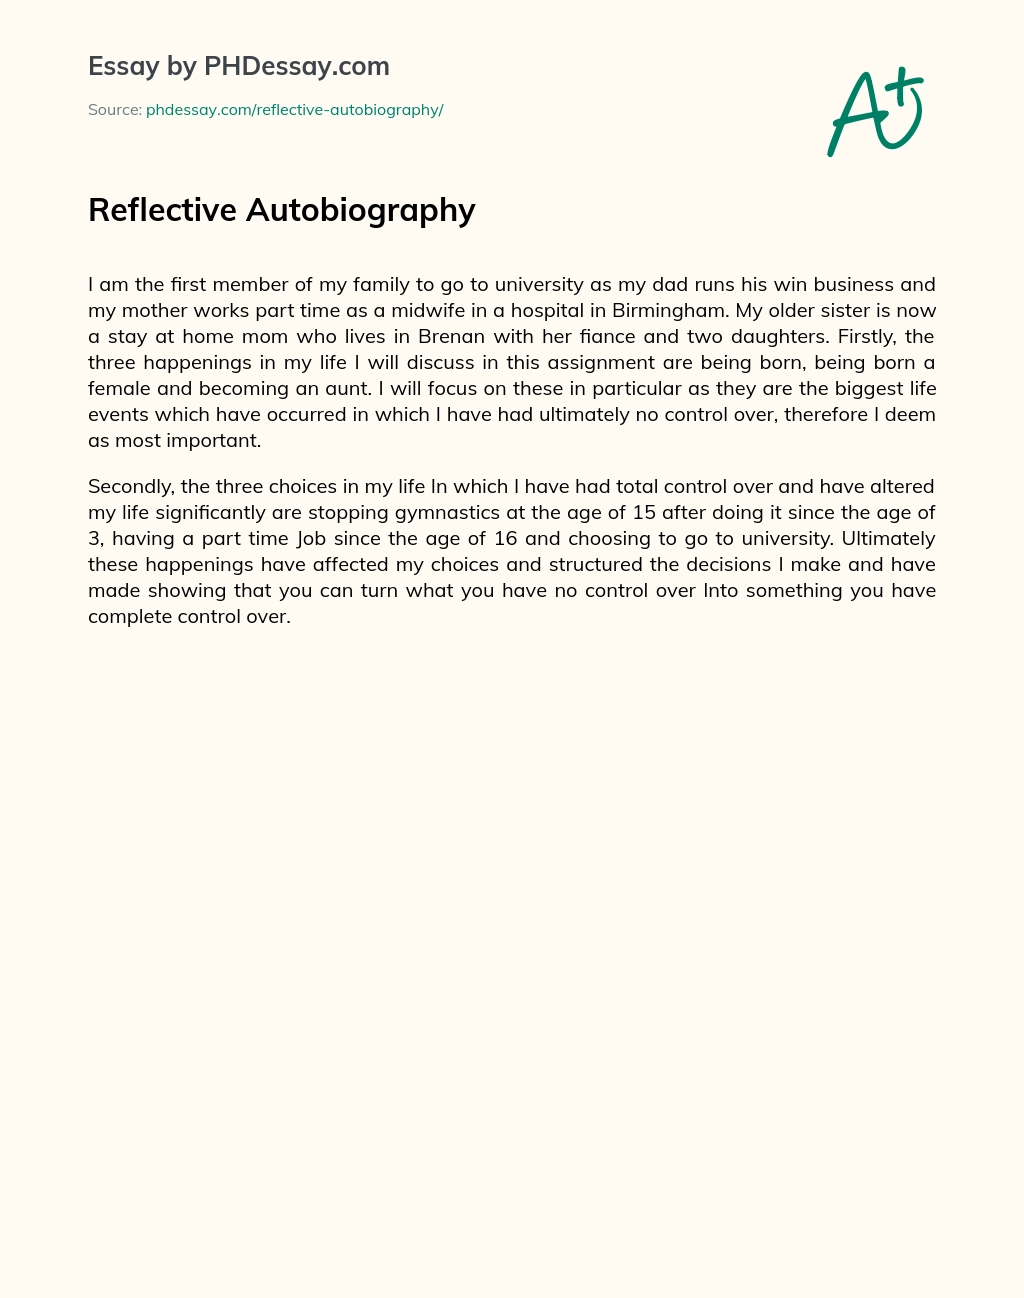 Reflective Autobiography essay